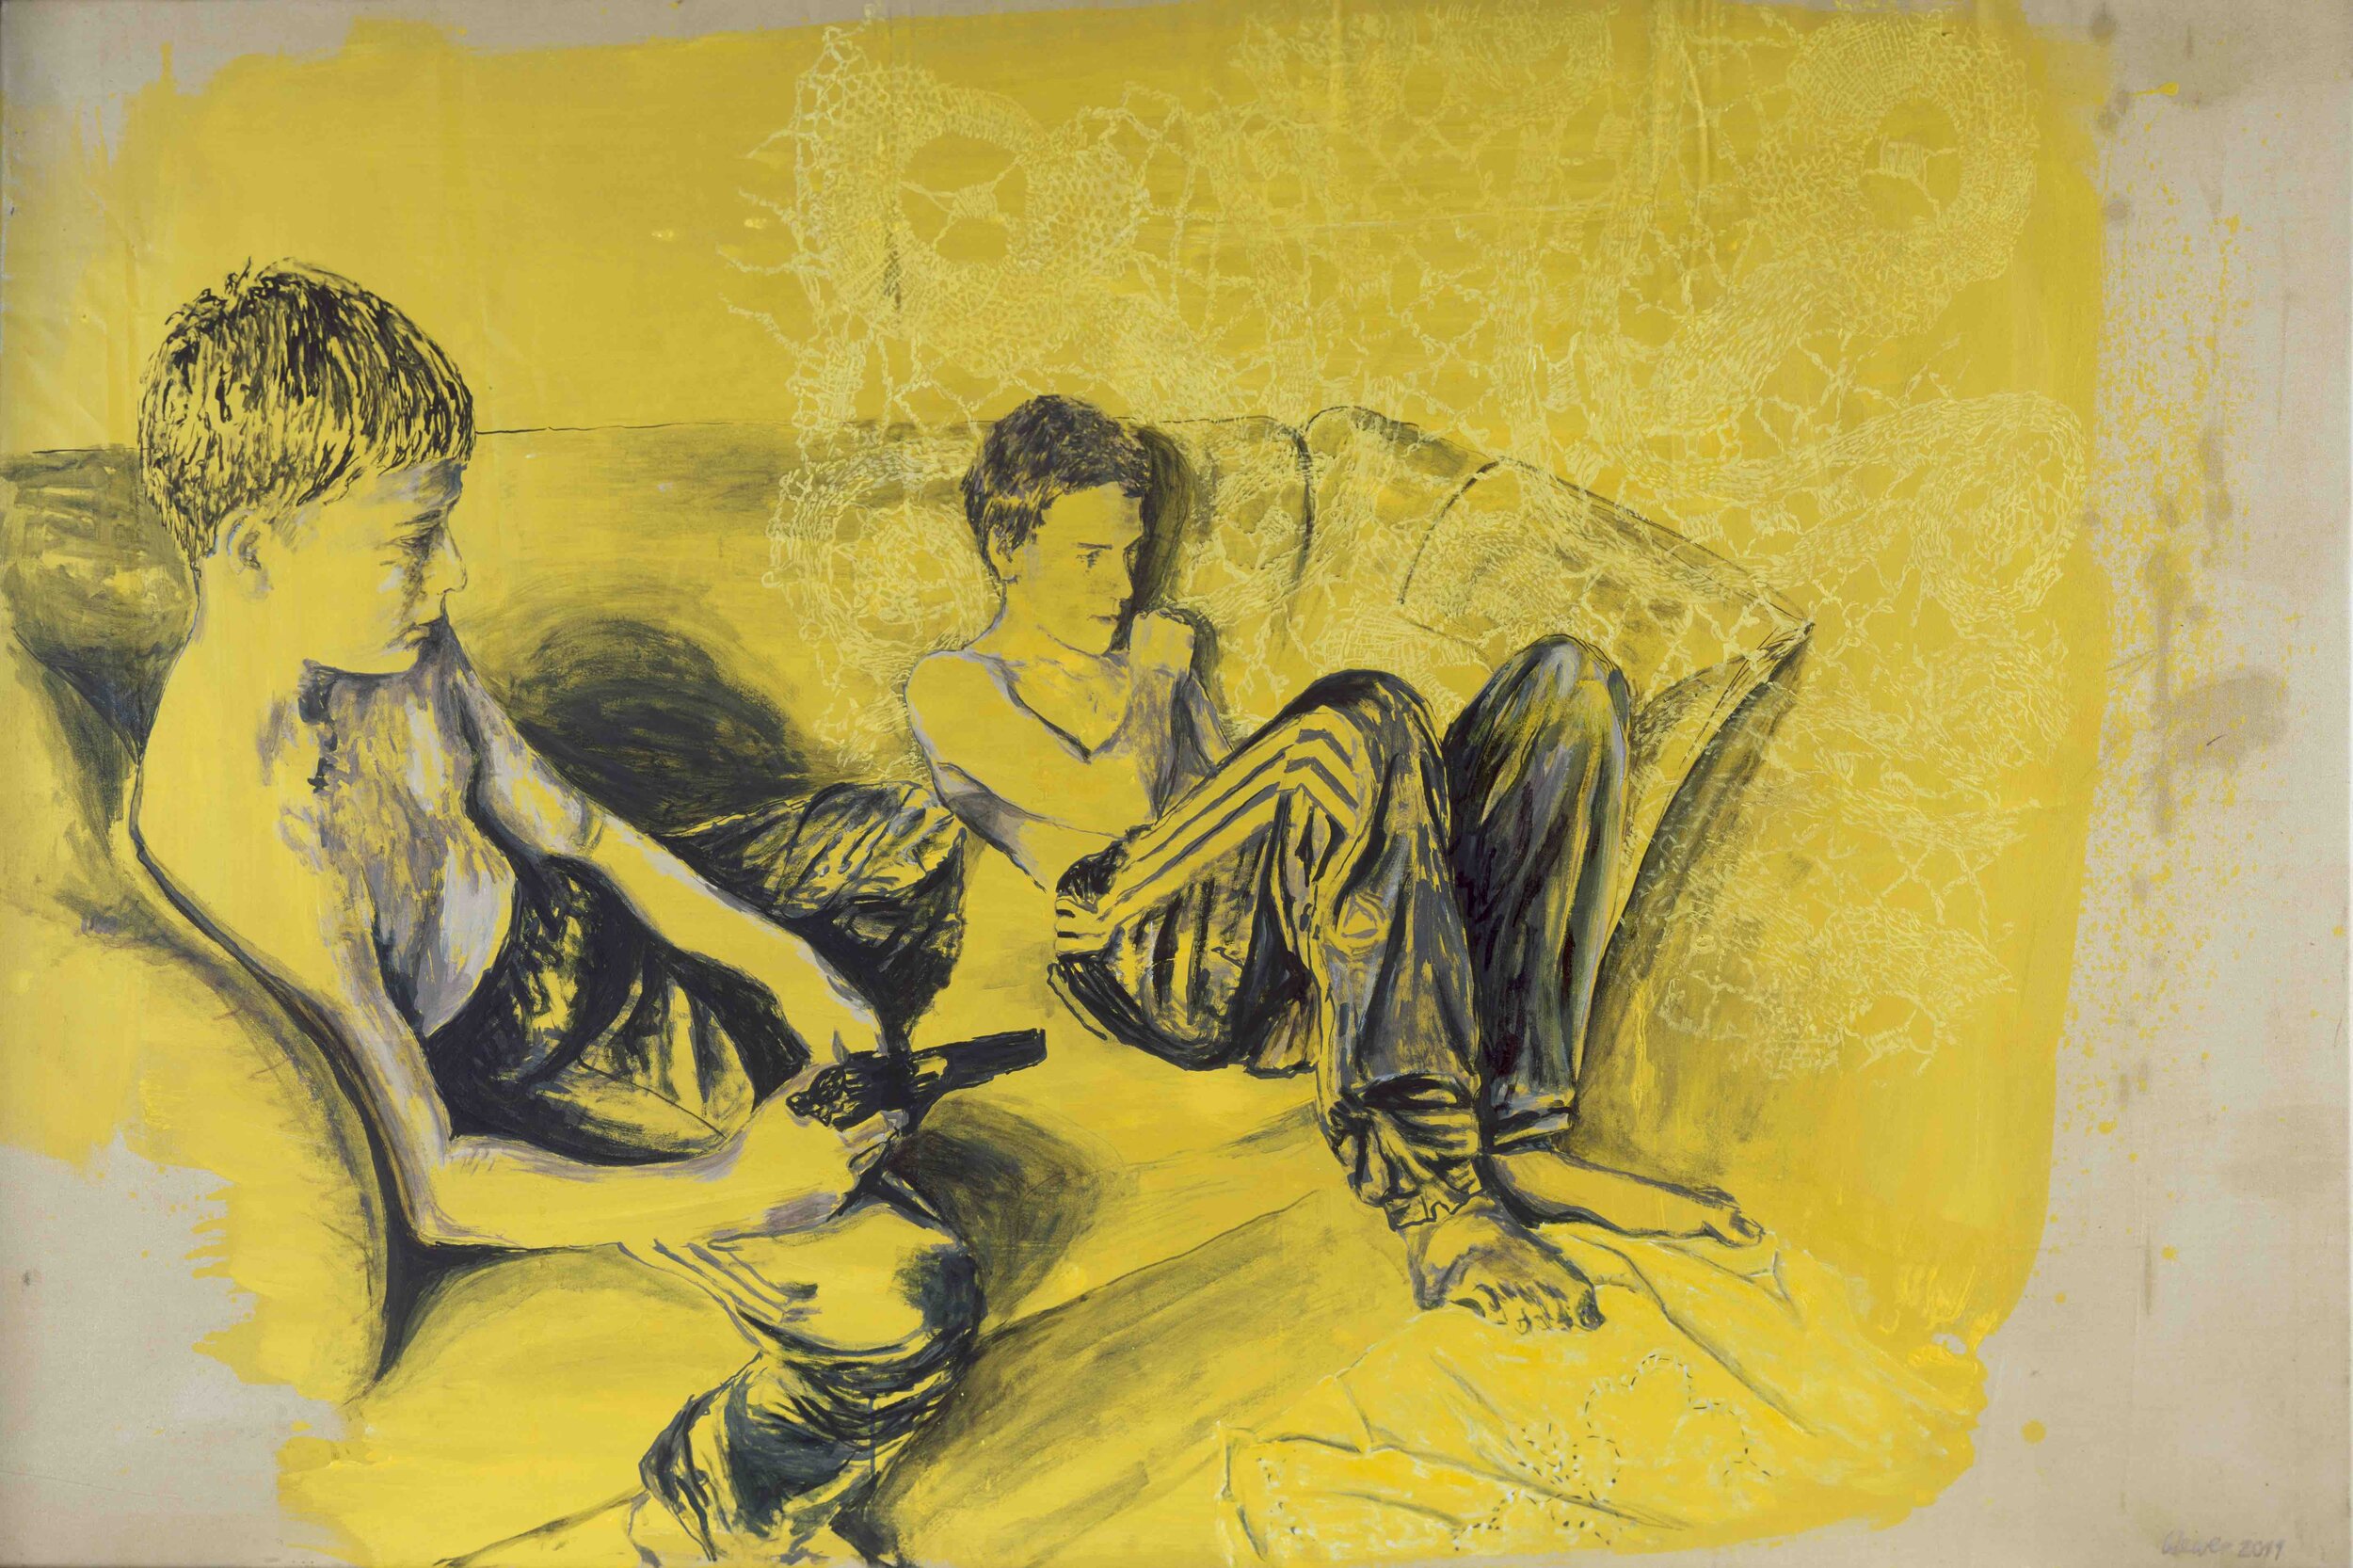 BRÜSSELER SPITZE I, 2012, acryl on canvas, 120 cm x 180 cm